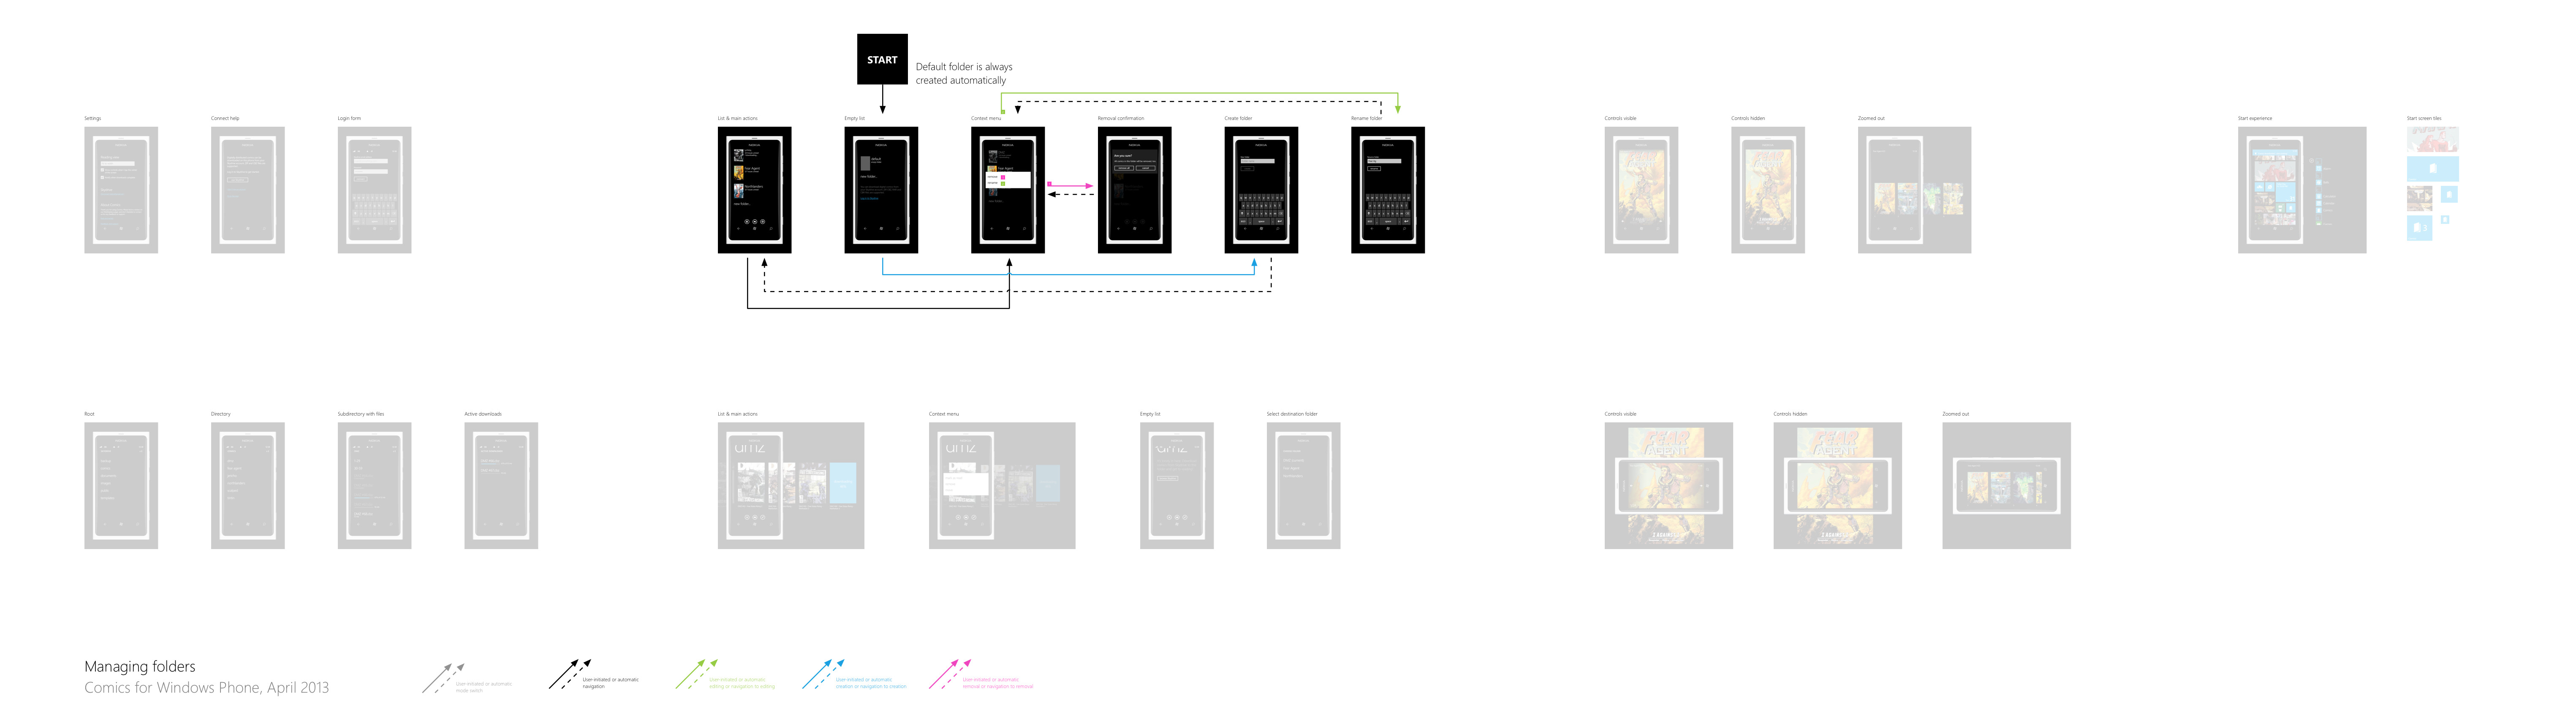 Comics for Windows Phone: Folders flow